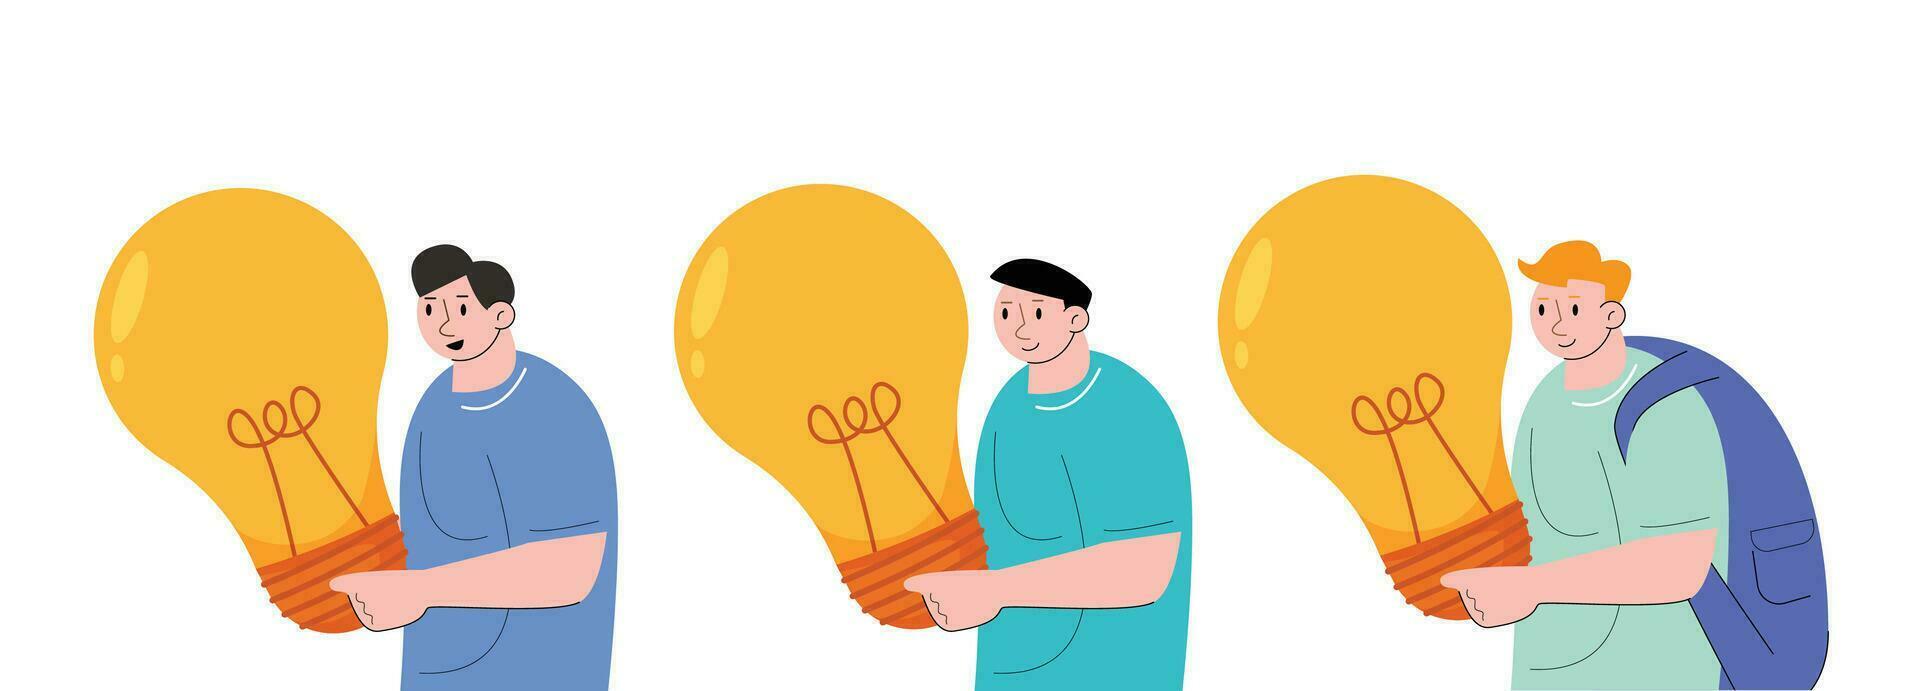 People Holding Light Bulbs Cartoon Character vector illustration